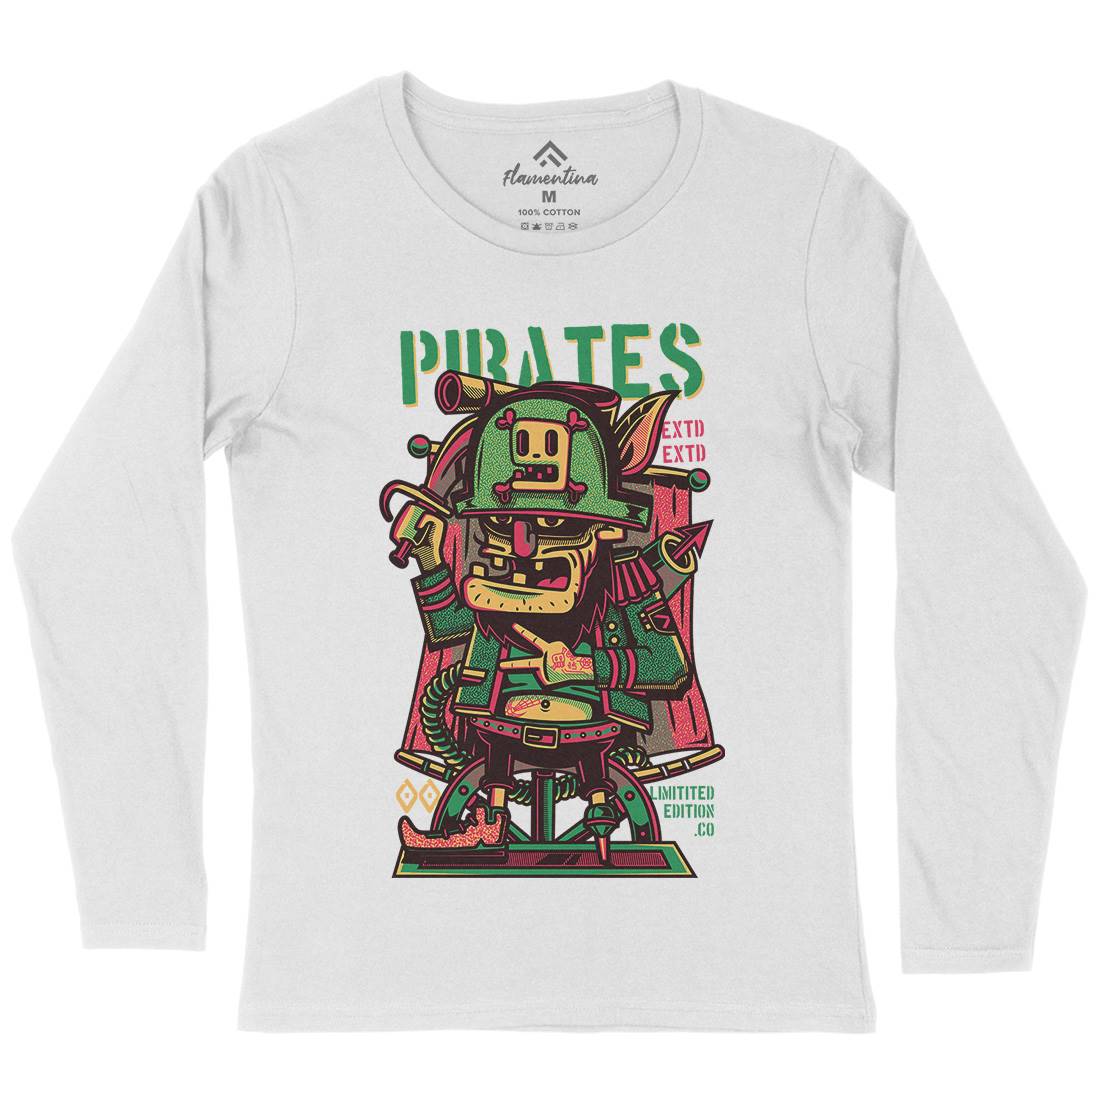 Pirates Womens Long Sleeve T-Shirt Navy D678